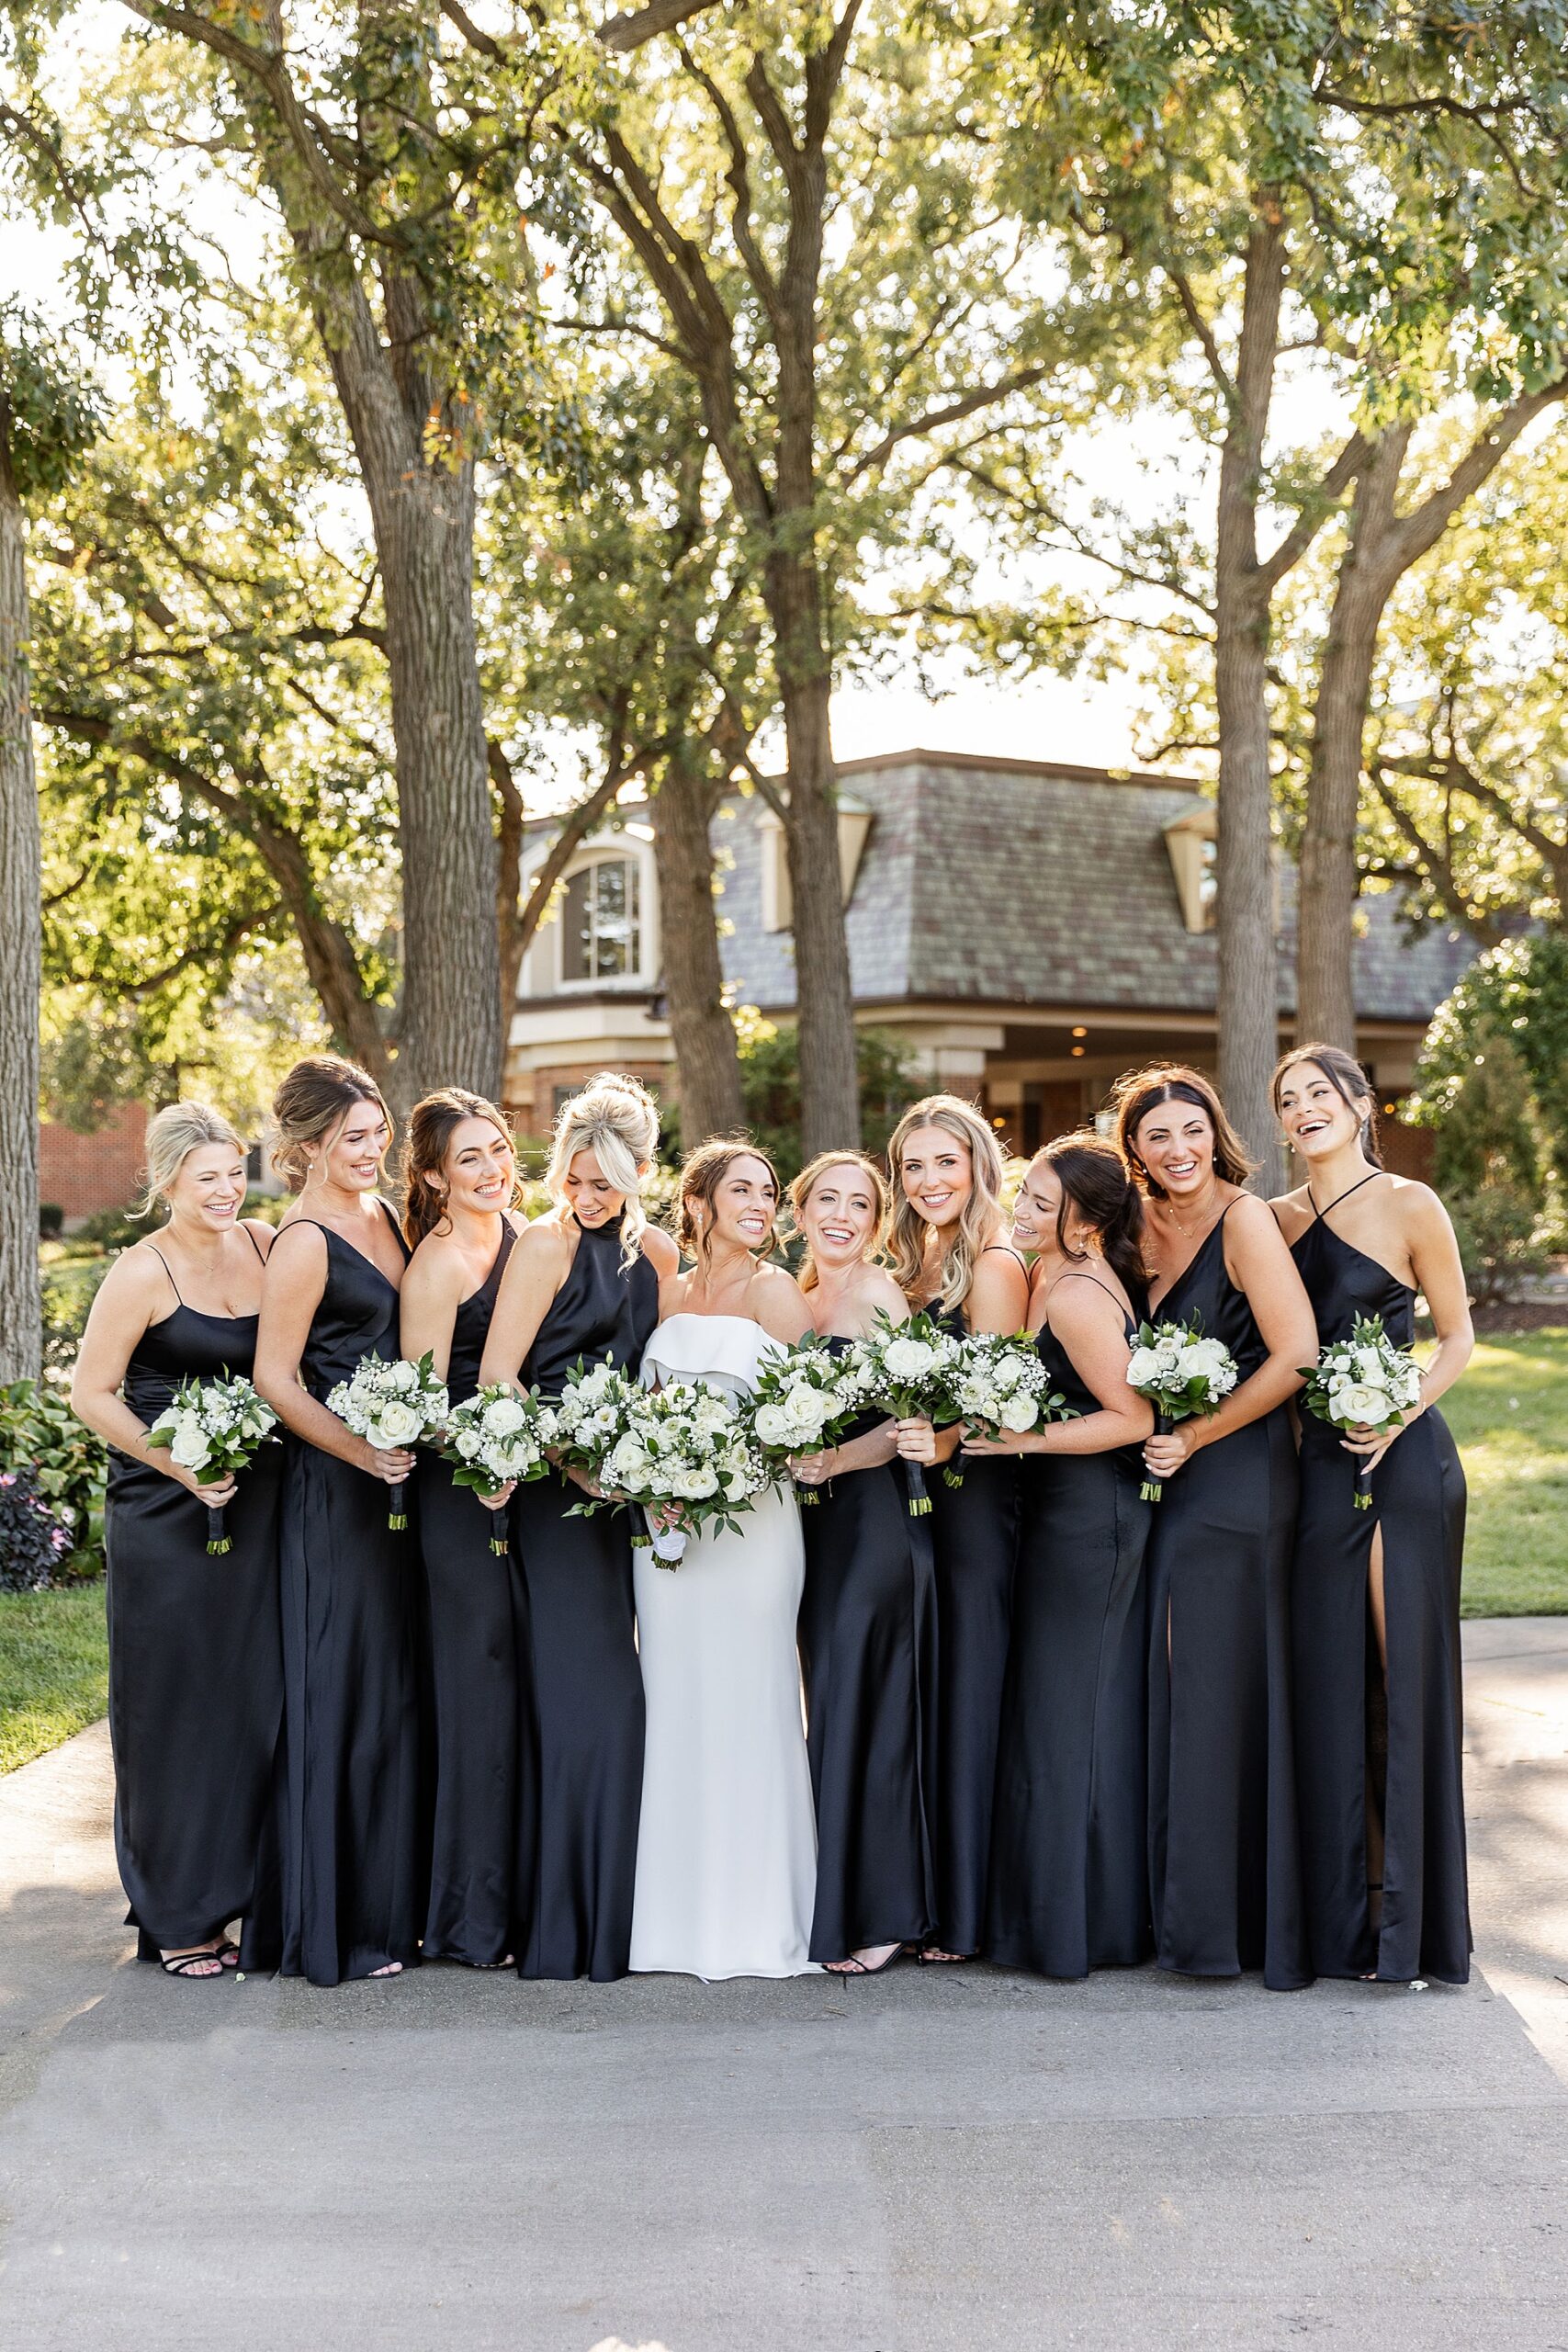 classic bridal party portraits of bridesmaids in black dresses